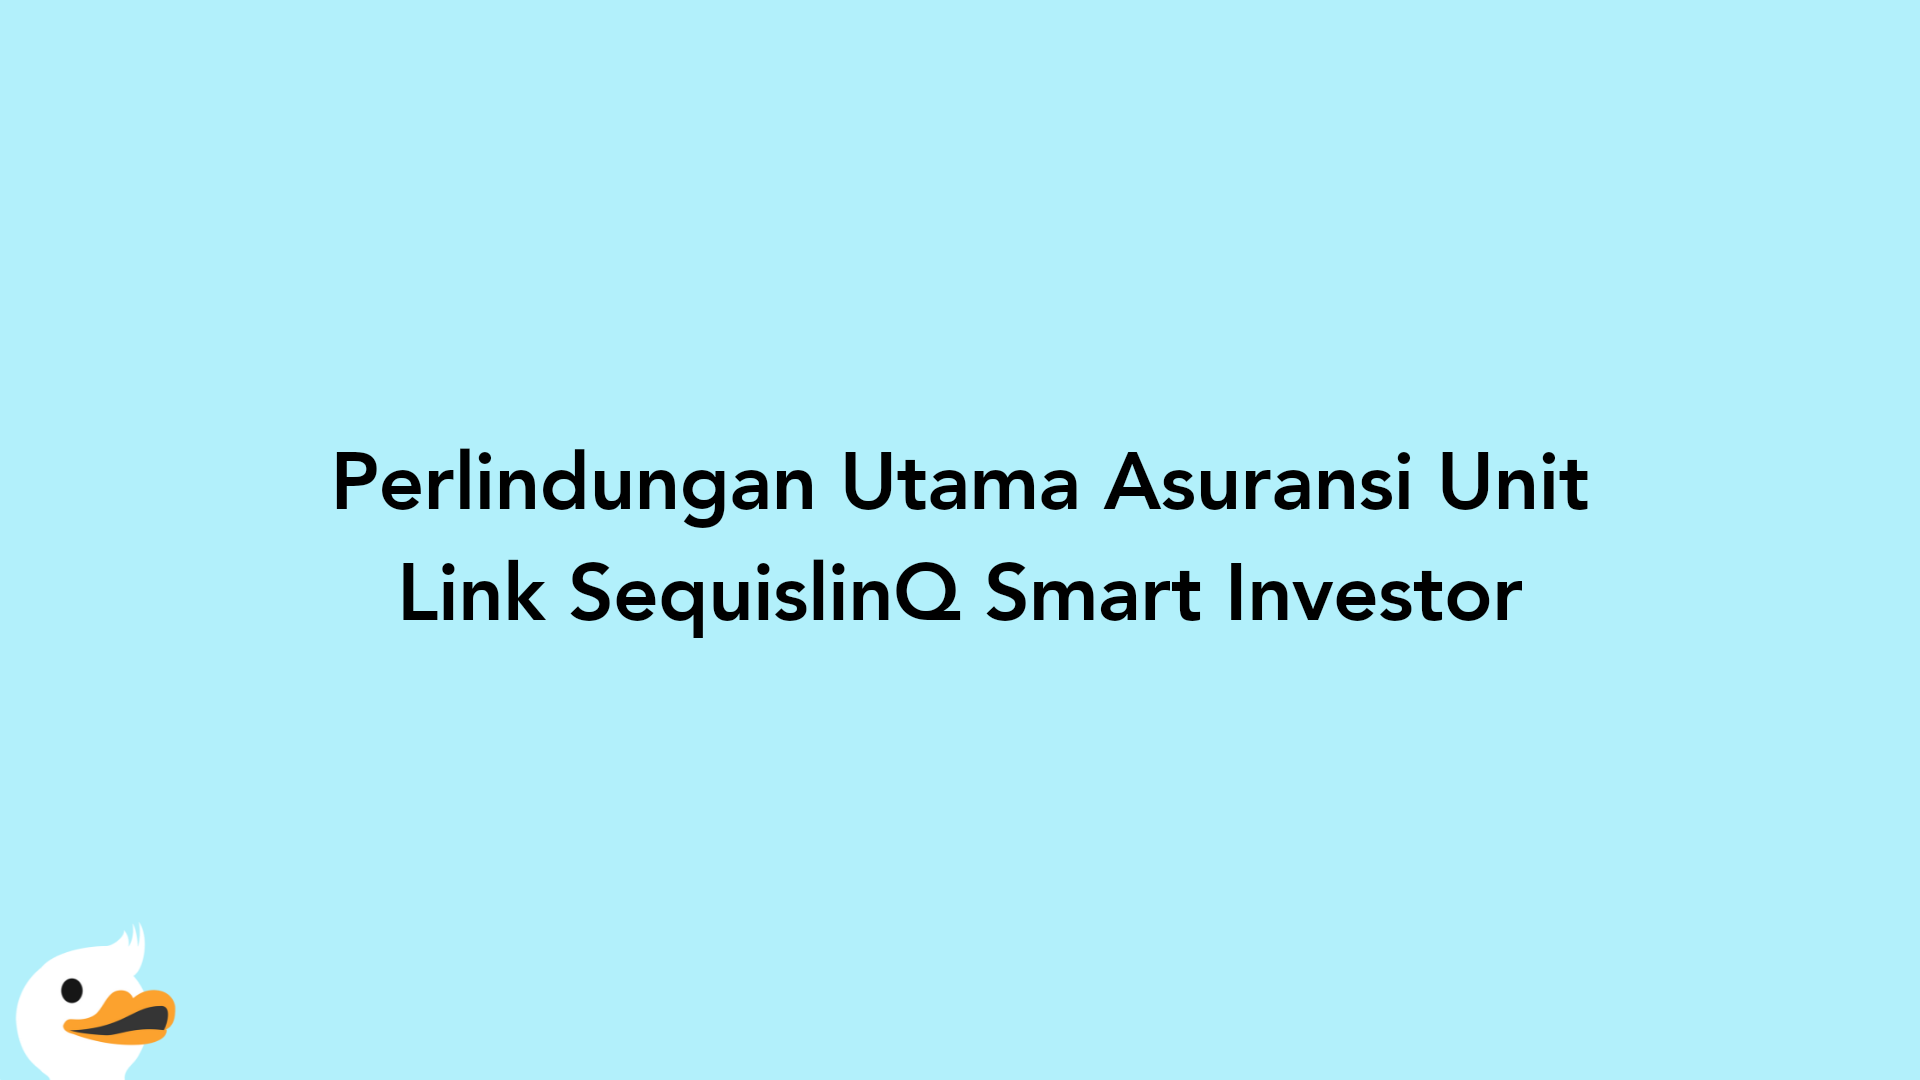 Perlindungan Utama Asuransi Unit Link SequislinQ Smart Investor